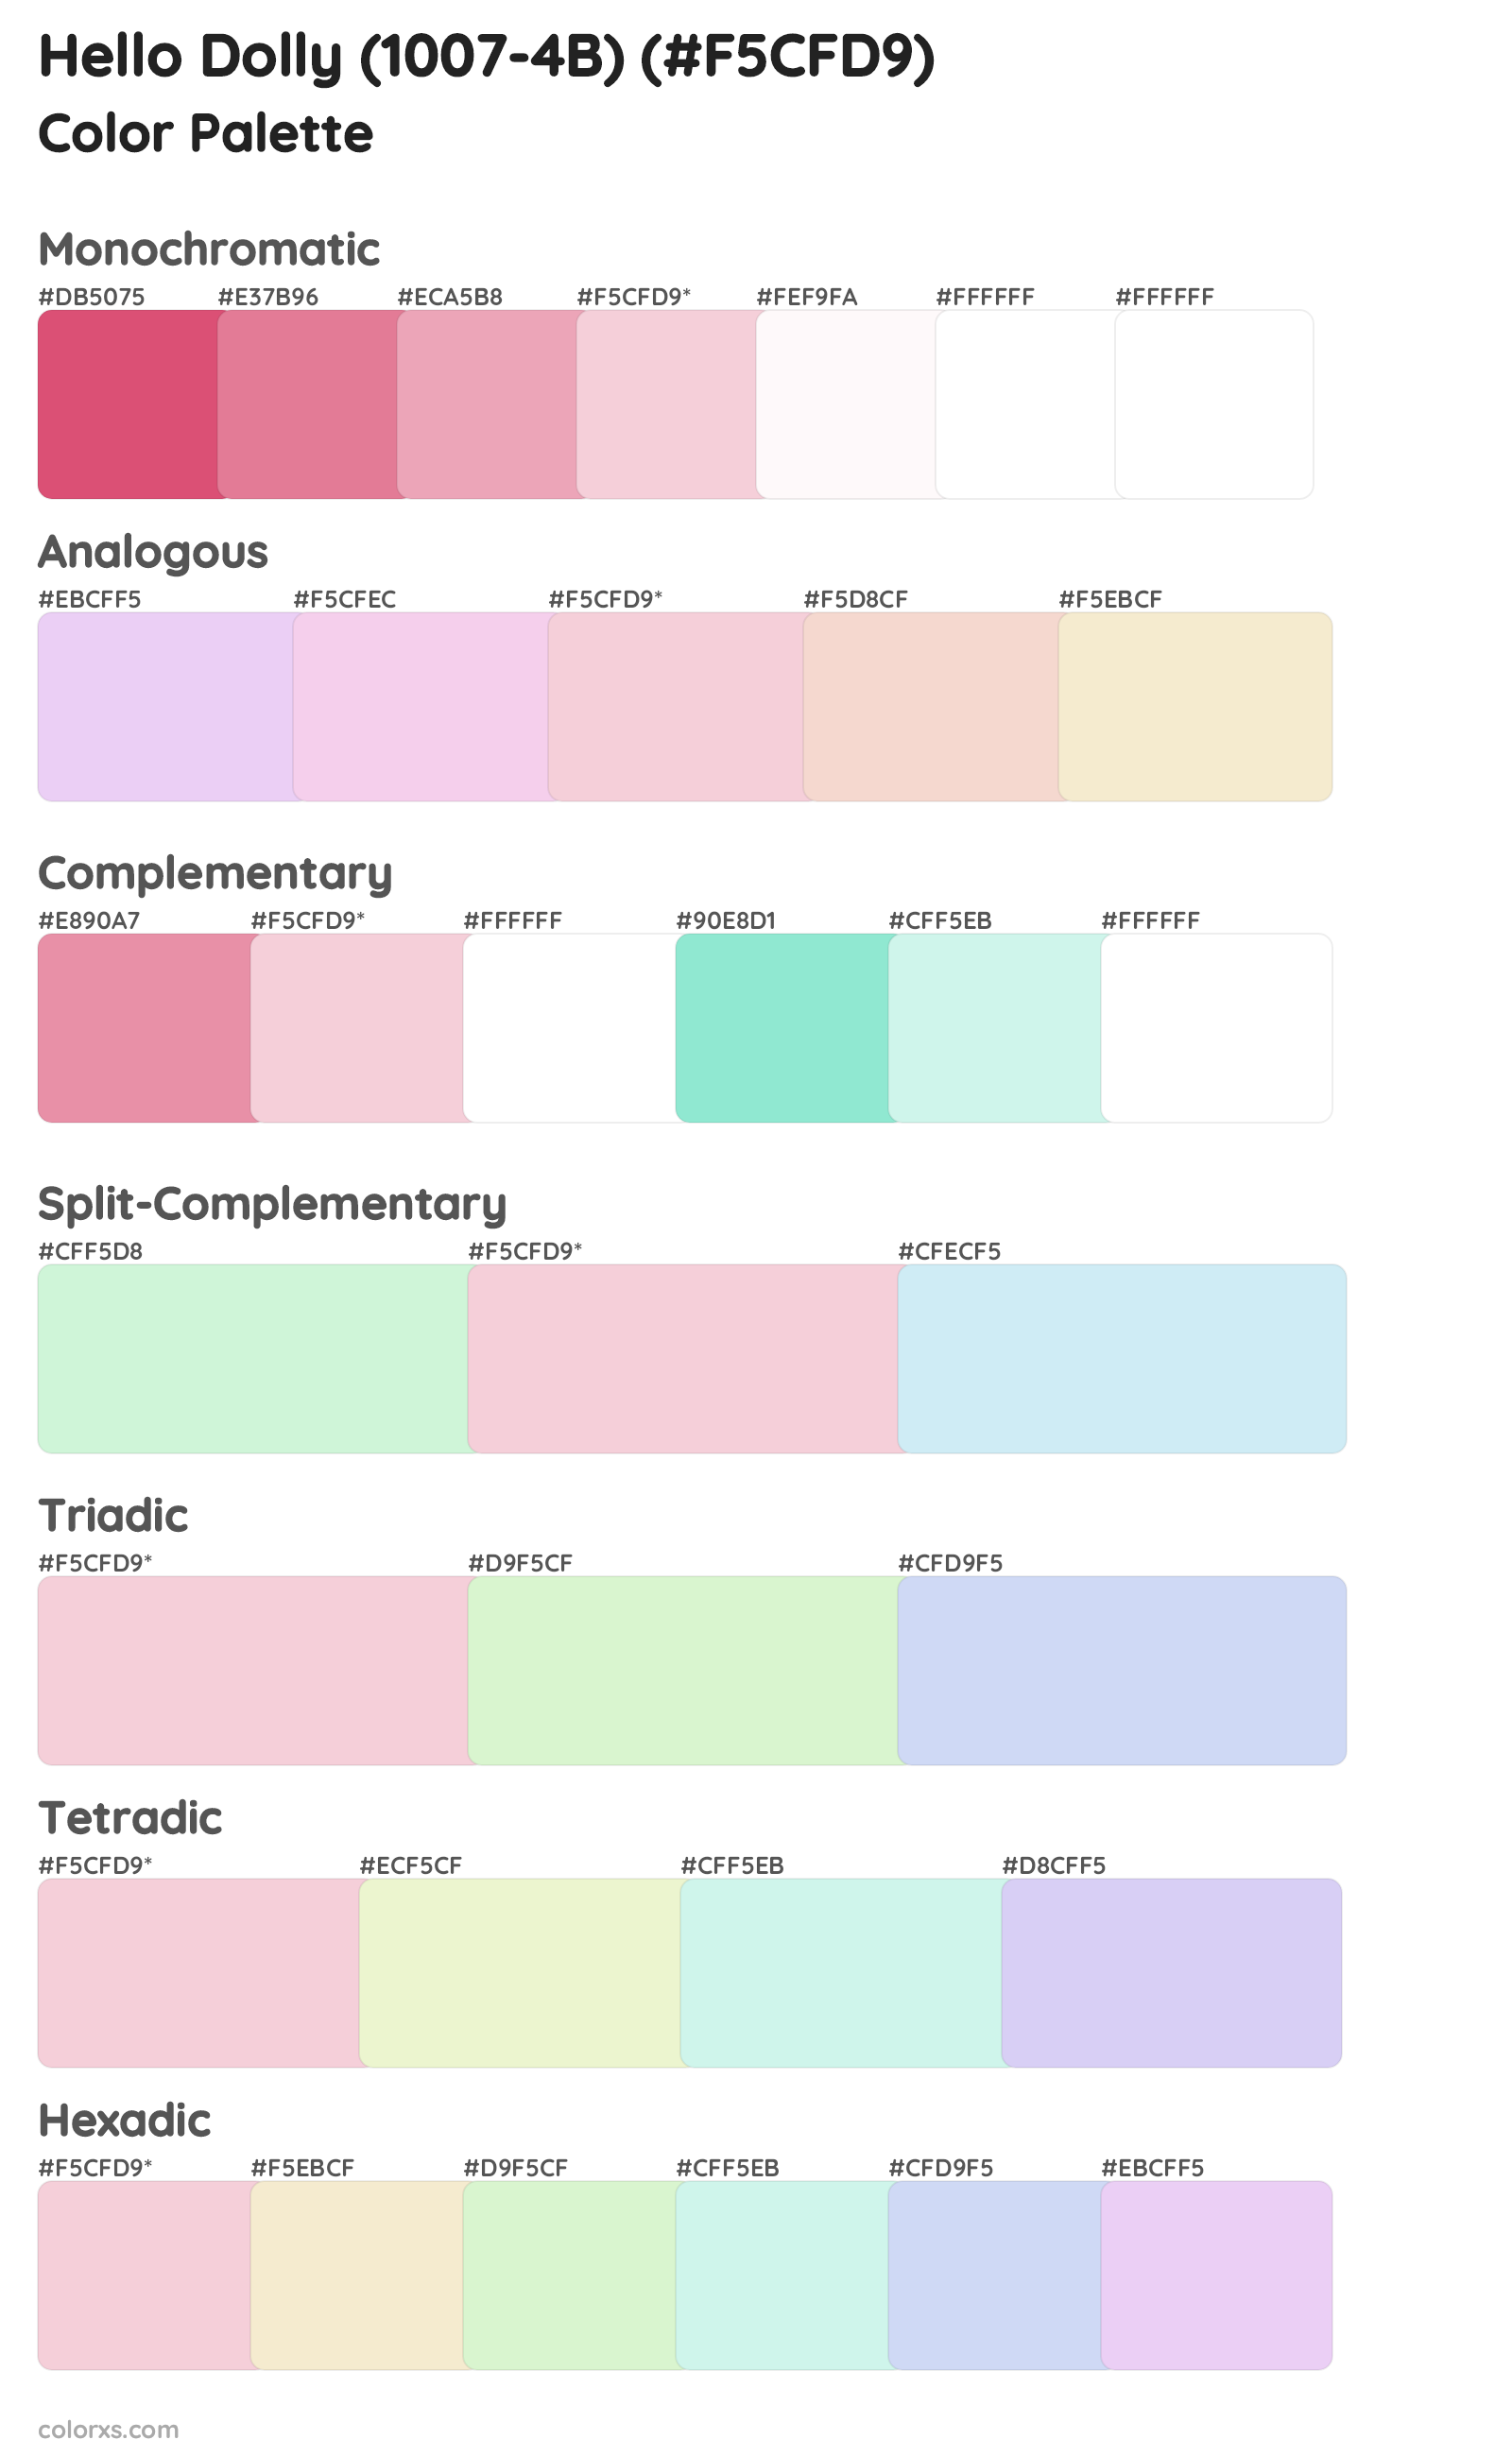 Hello Dolly (1007-4B) Color Scheme Palettes